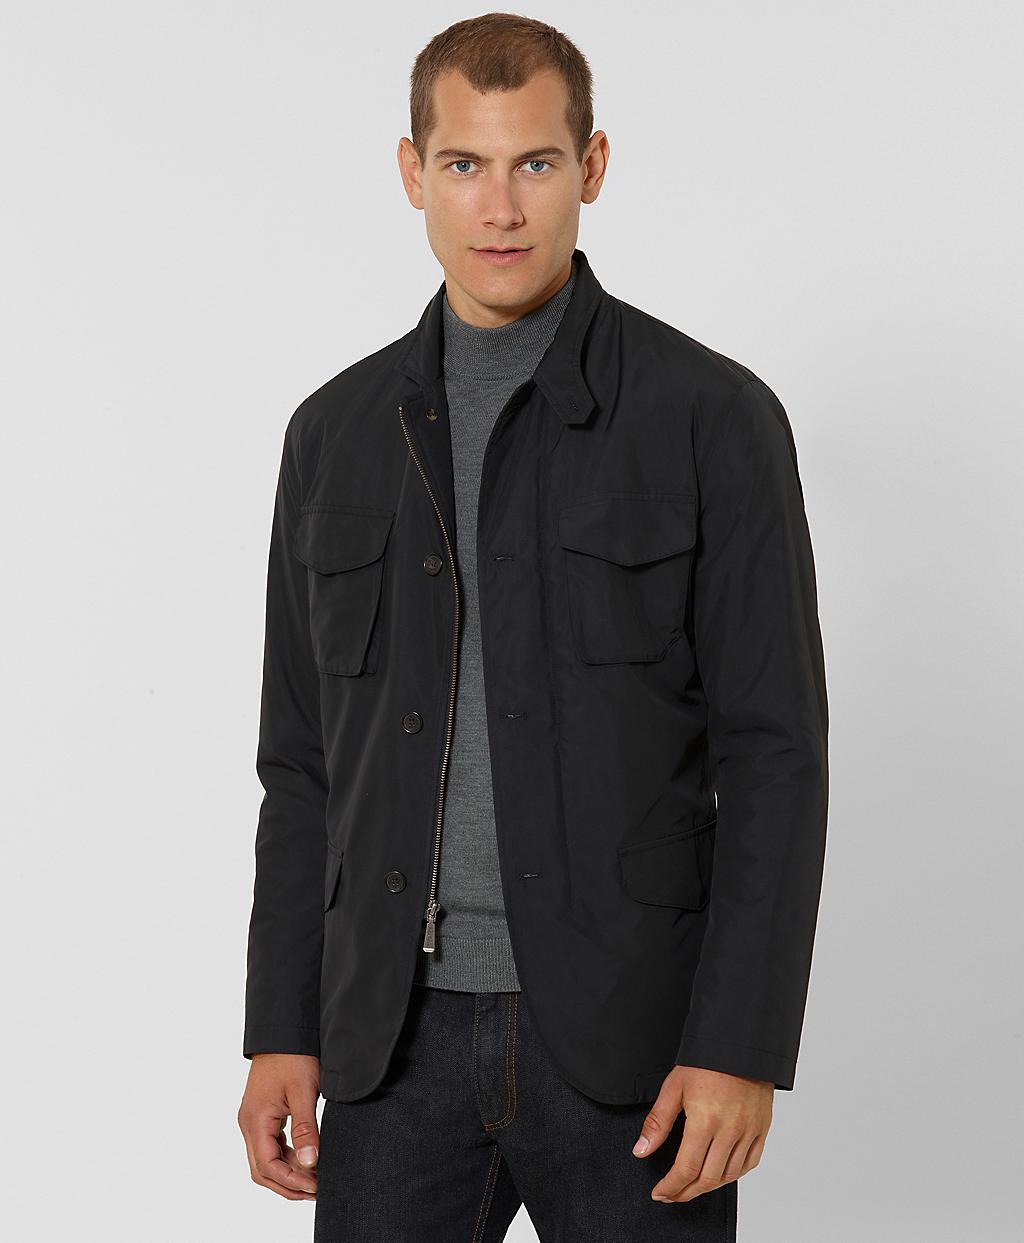 Lyst - Brooks Brothers Edward Hybrid Jacket in Black for Men